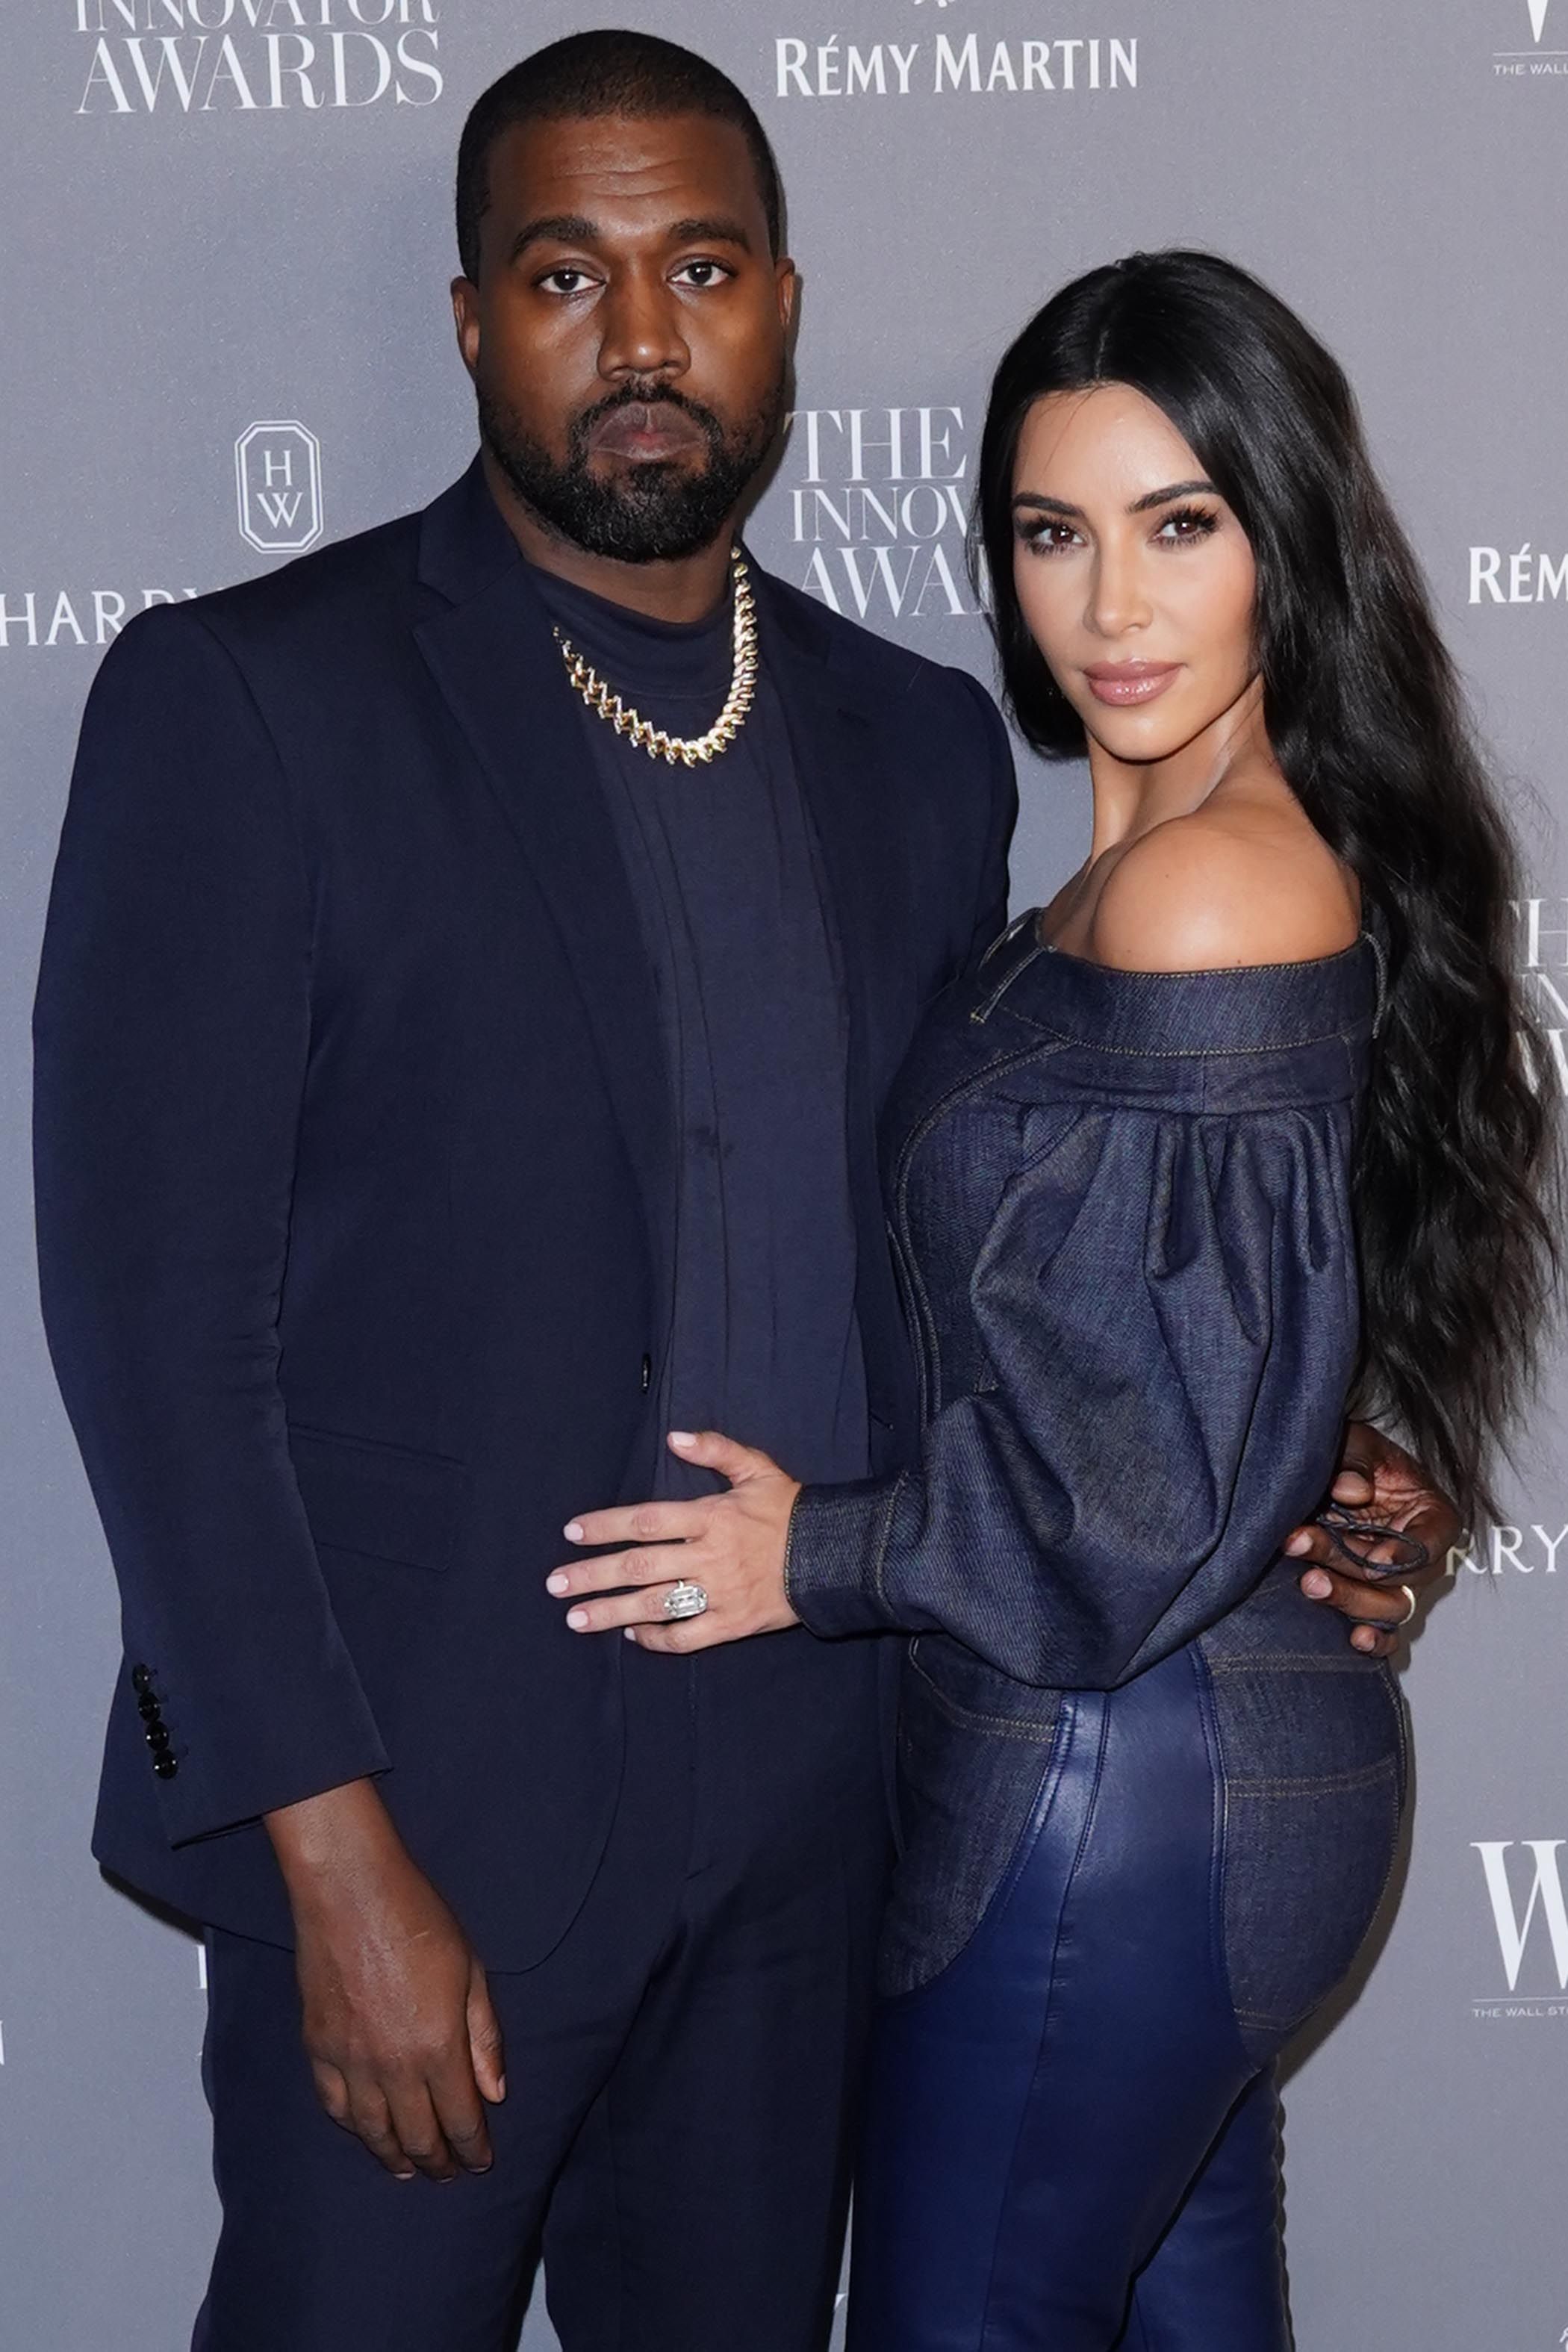 Kanye West and his ex-wife Kim Kardashian